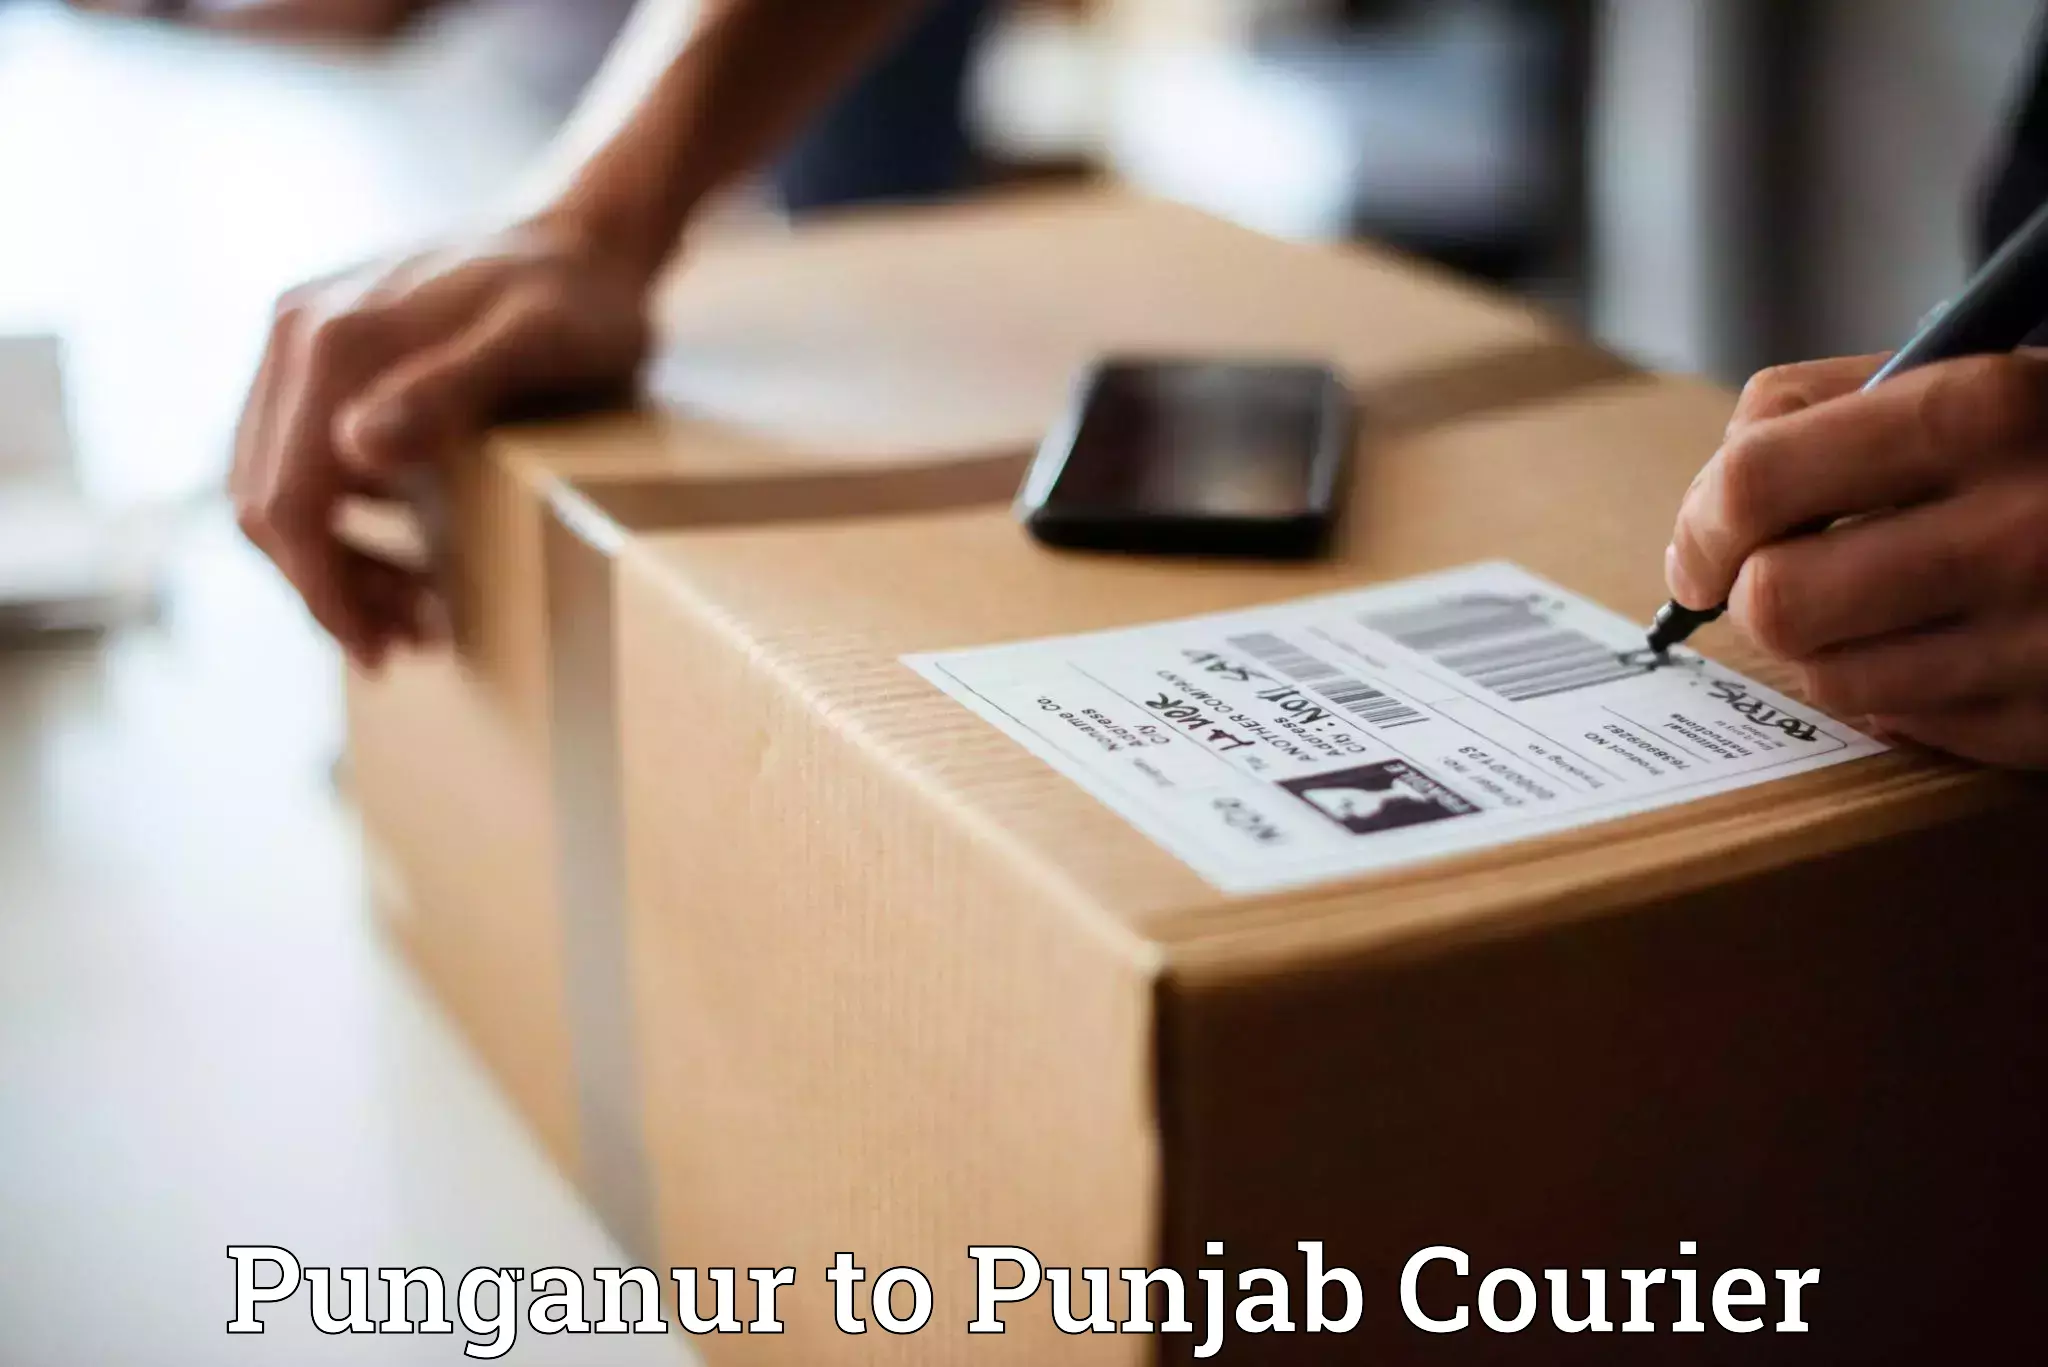 Efficient logistics management Punganur to Punjab